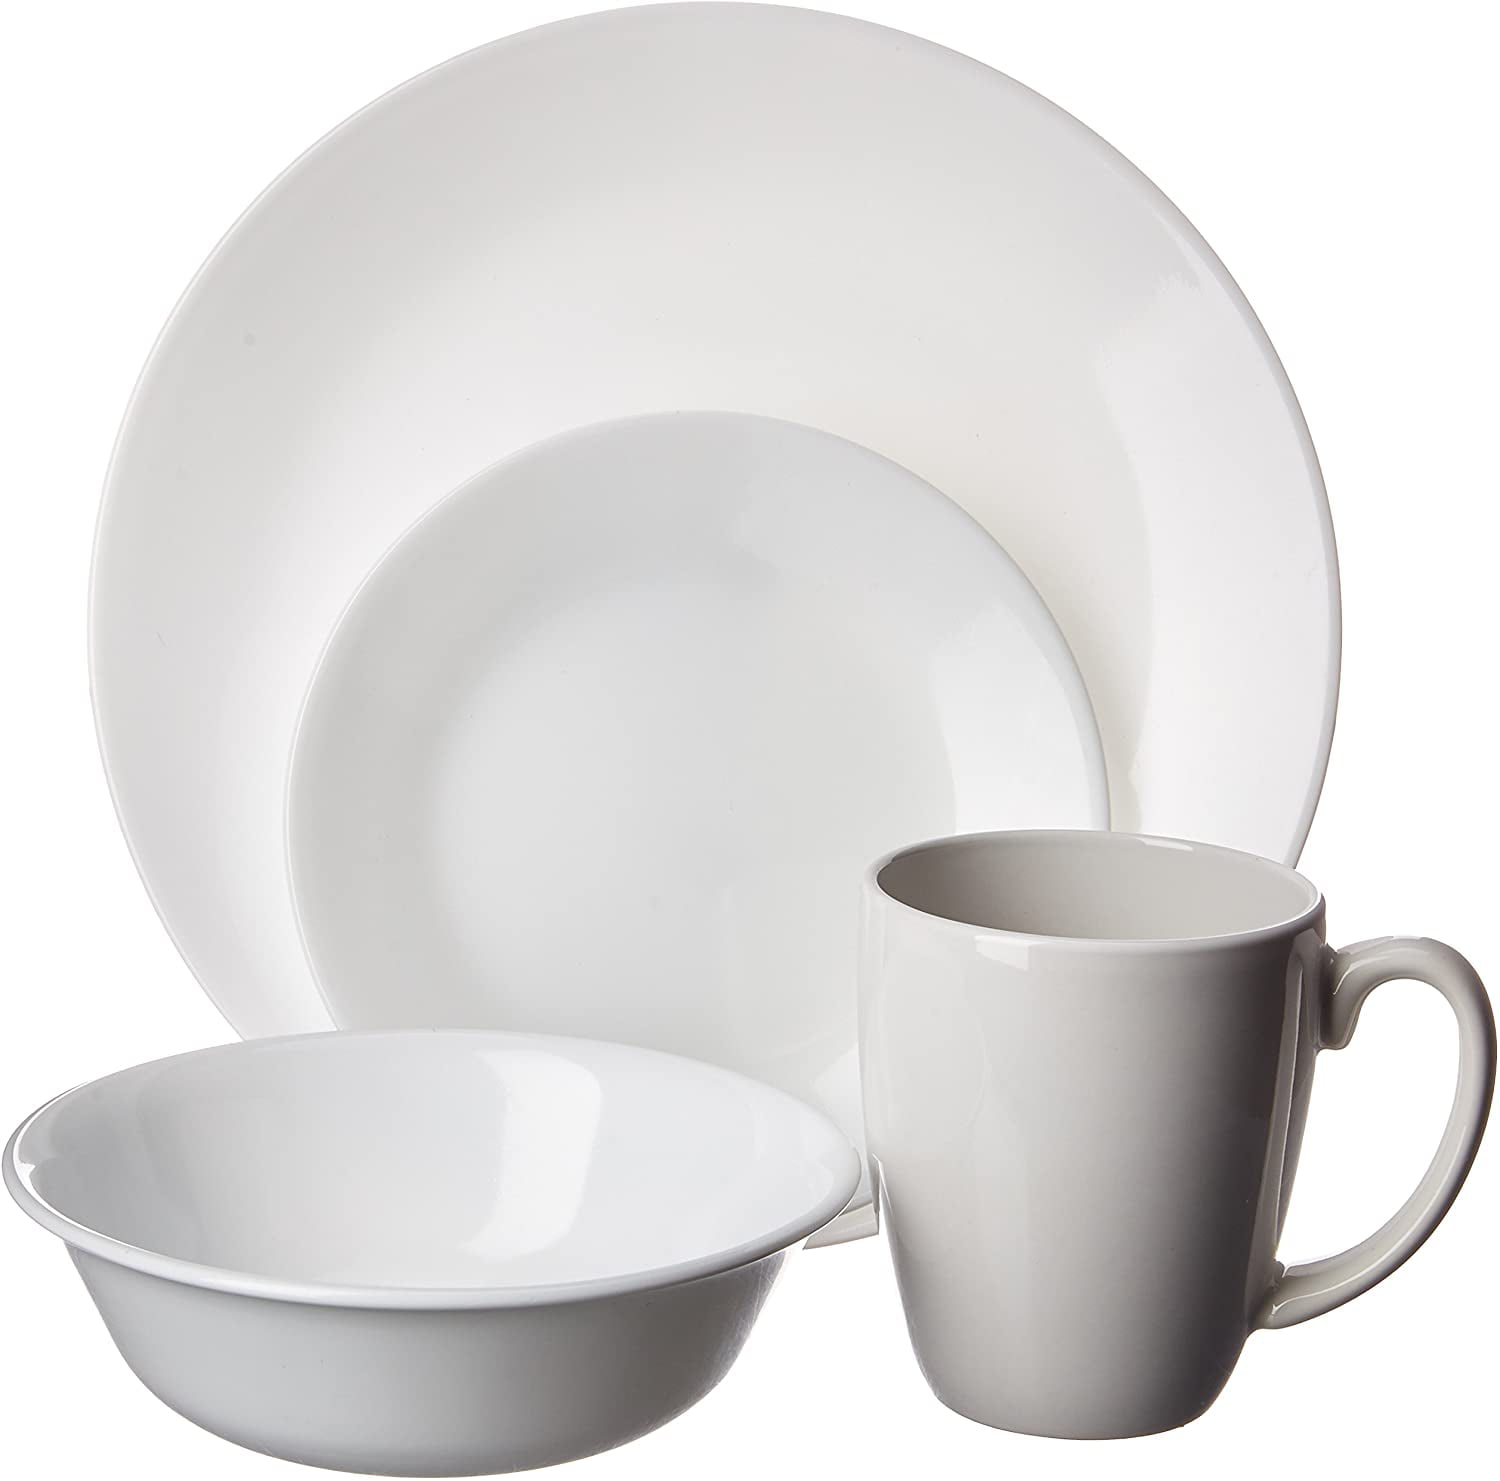 Corelle Livingware Lia Decorated Dinnerware Set Plate Bowls Home 16-piece Set 